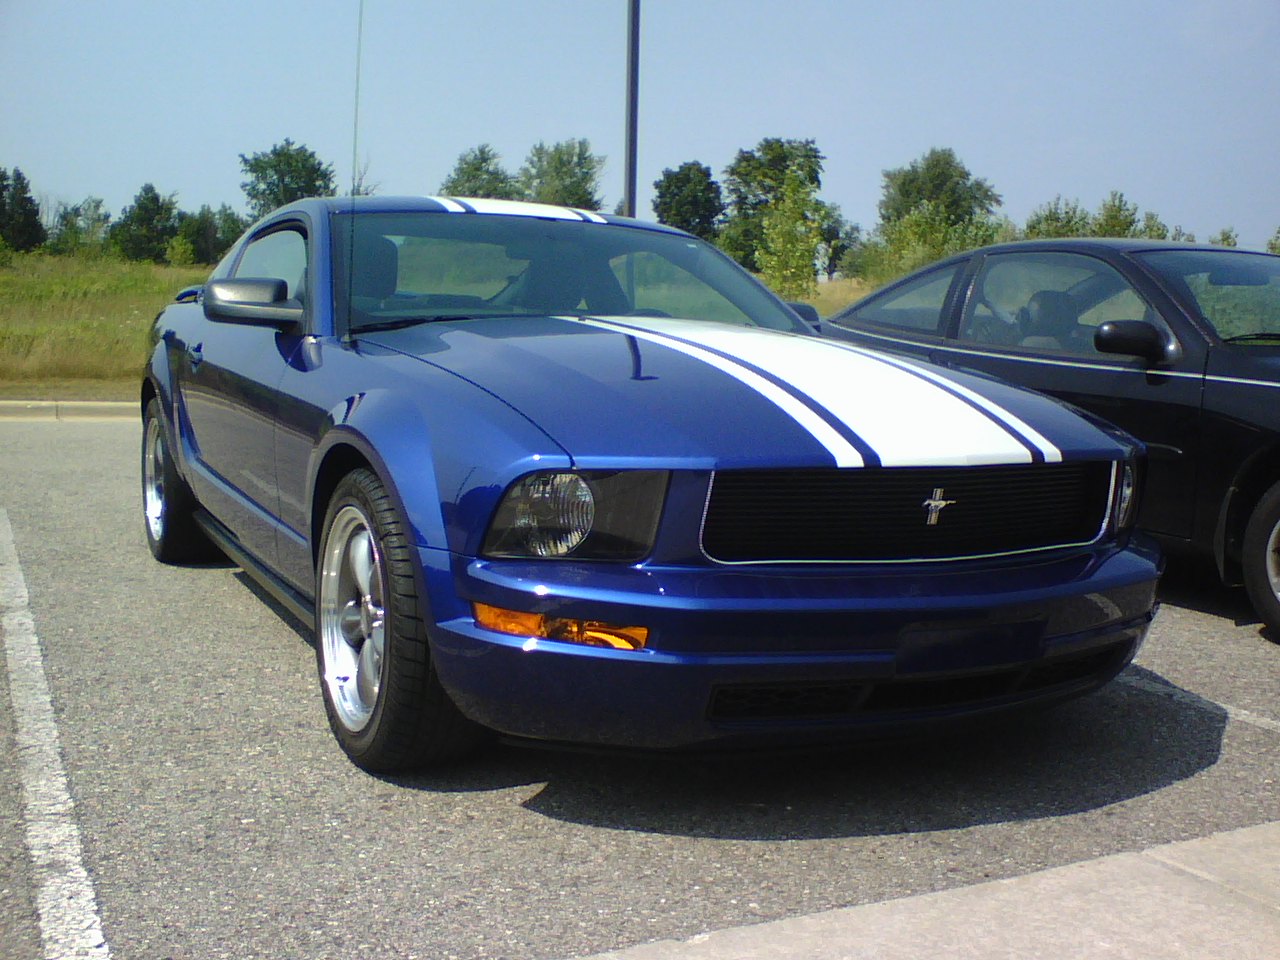  2005 Ford Mustang v6